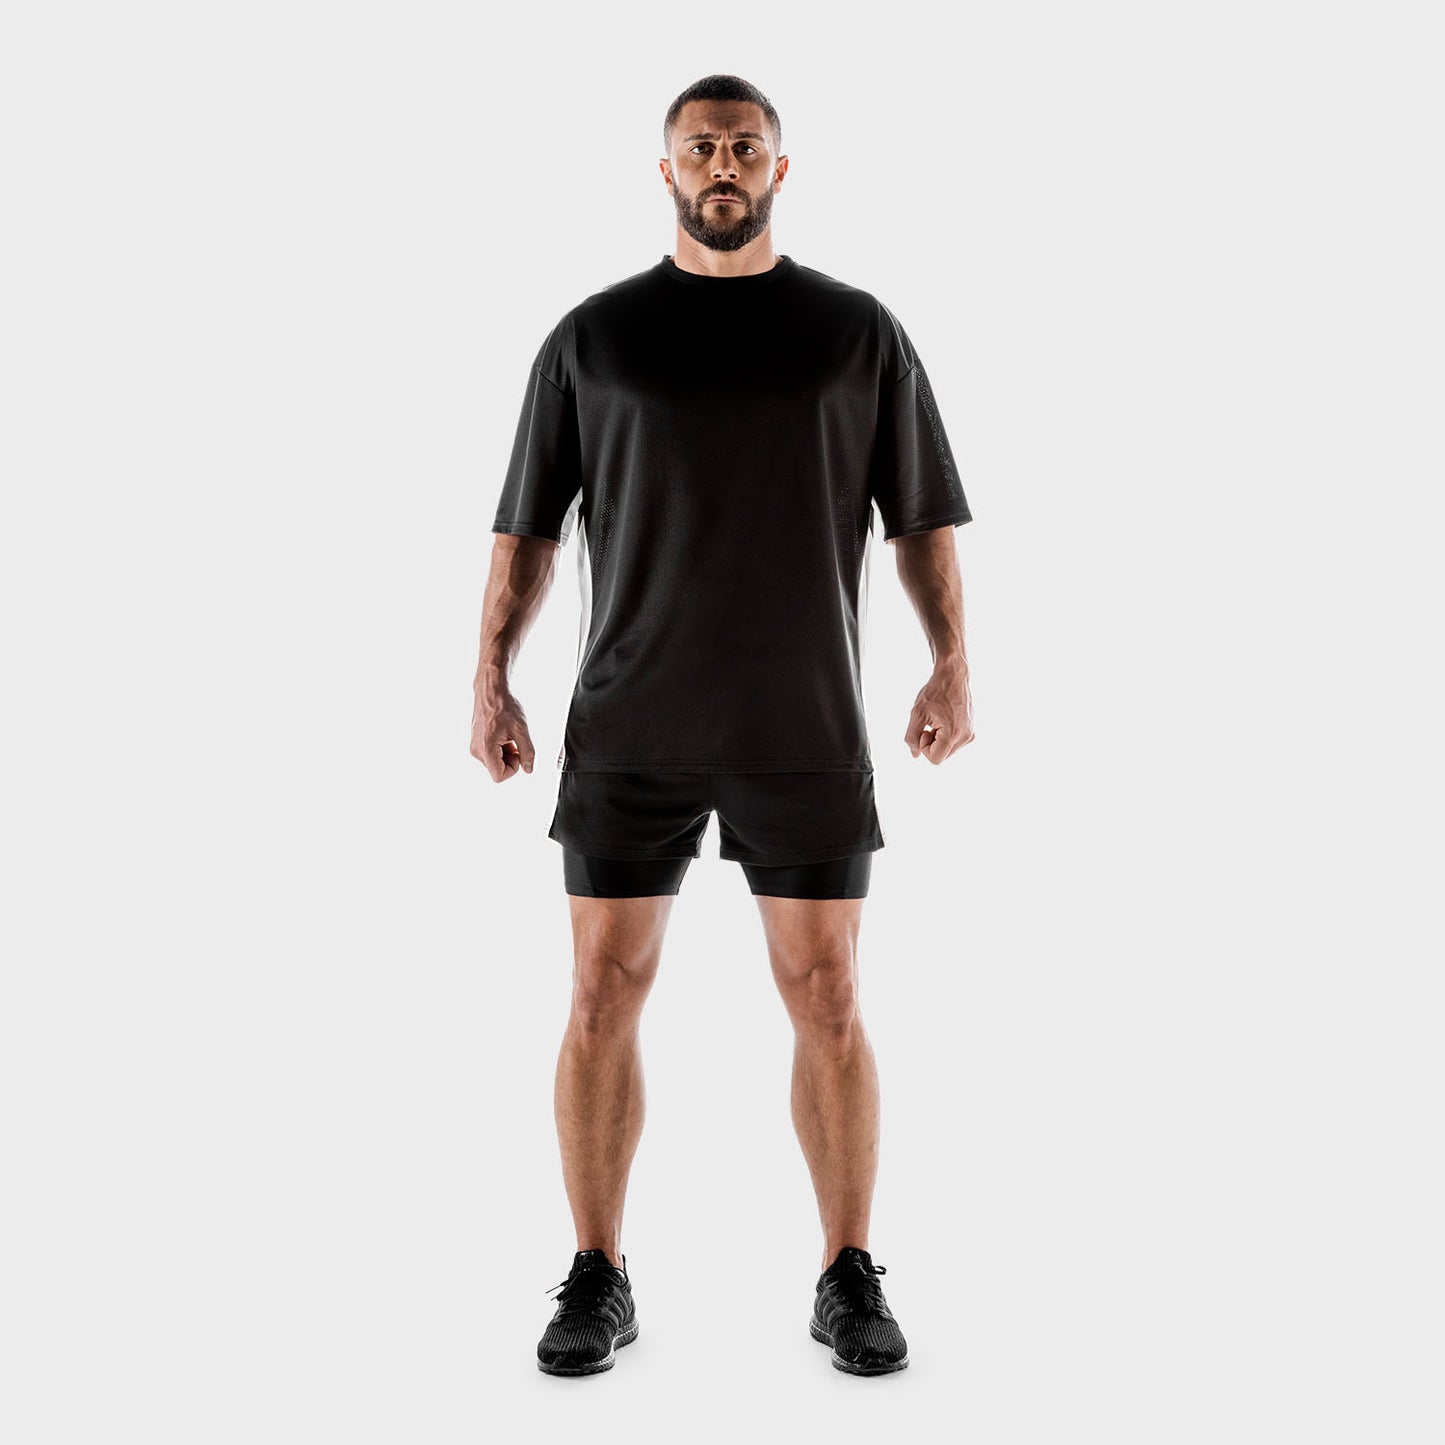 squatwolf-gym-wear-hybrid-2-0-oversize-tee-black-workout-shirts-for-men